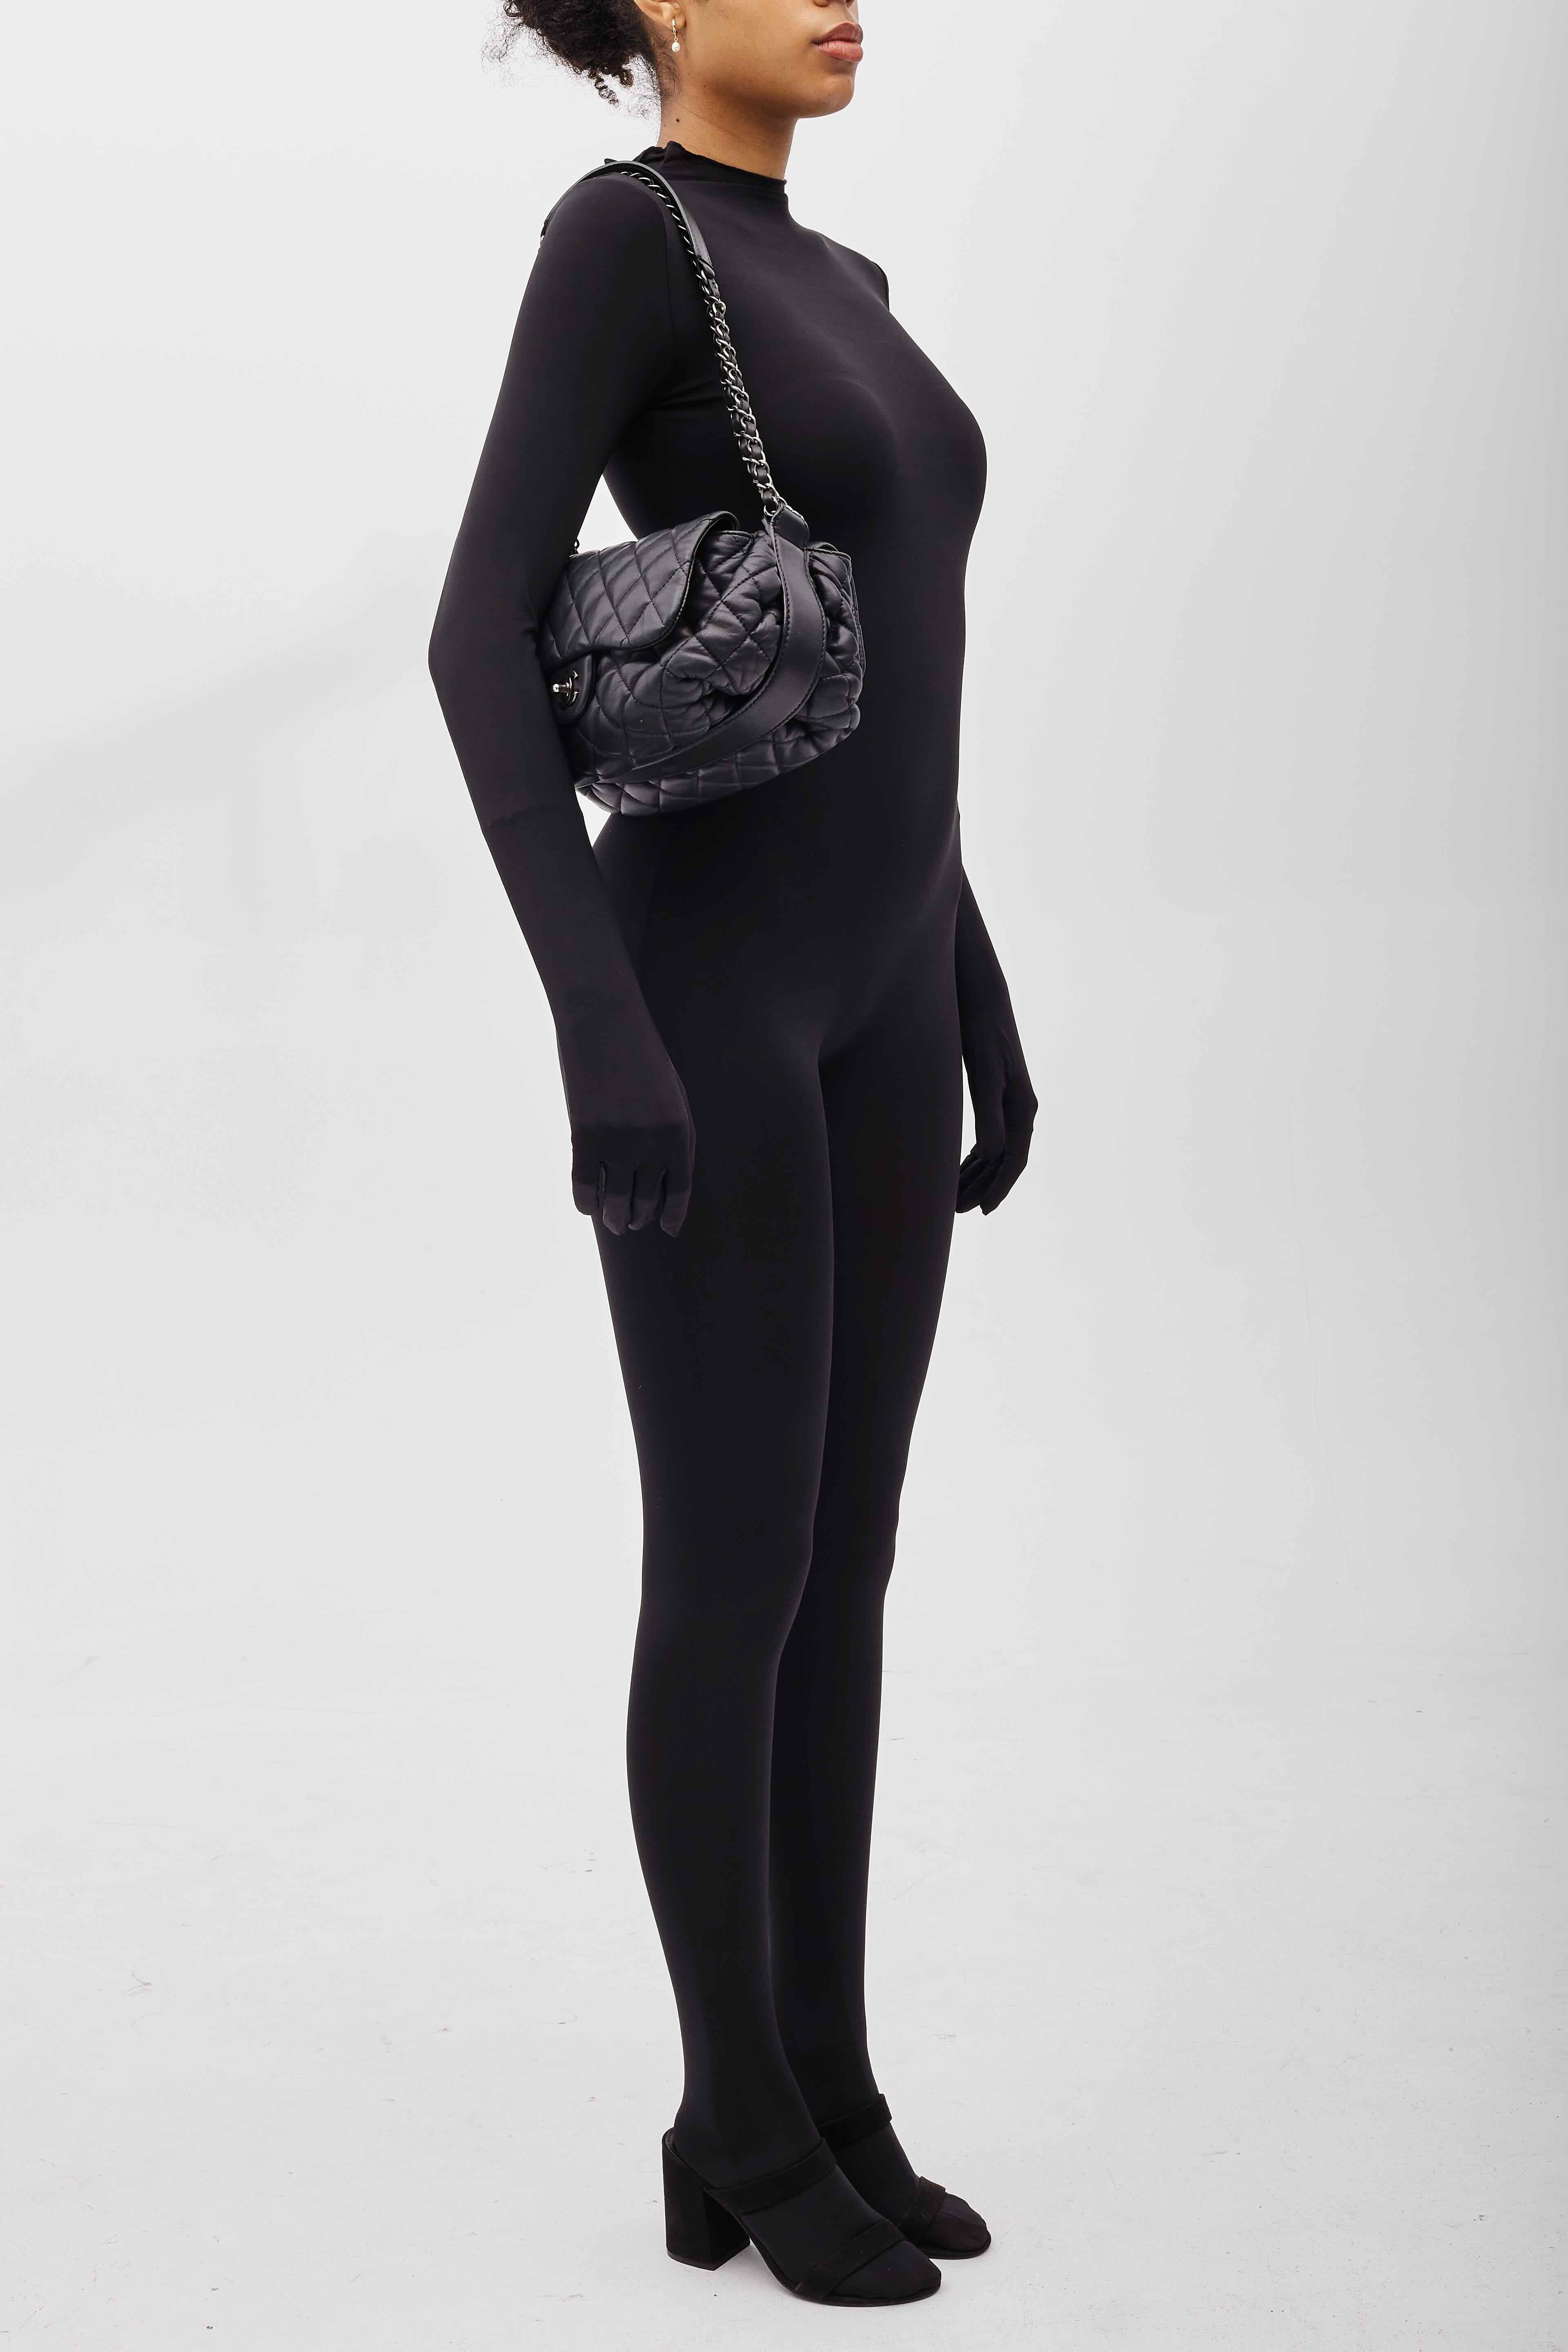 Chanel Black Lambskin Two Way Flap Shoulder Bag For Sale 5